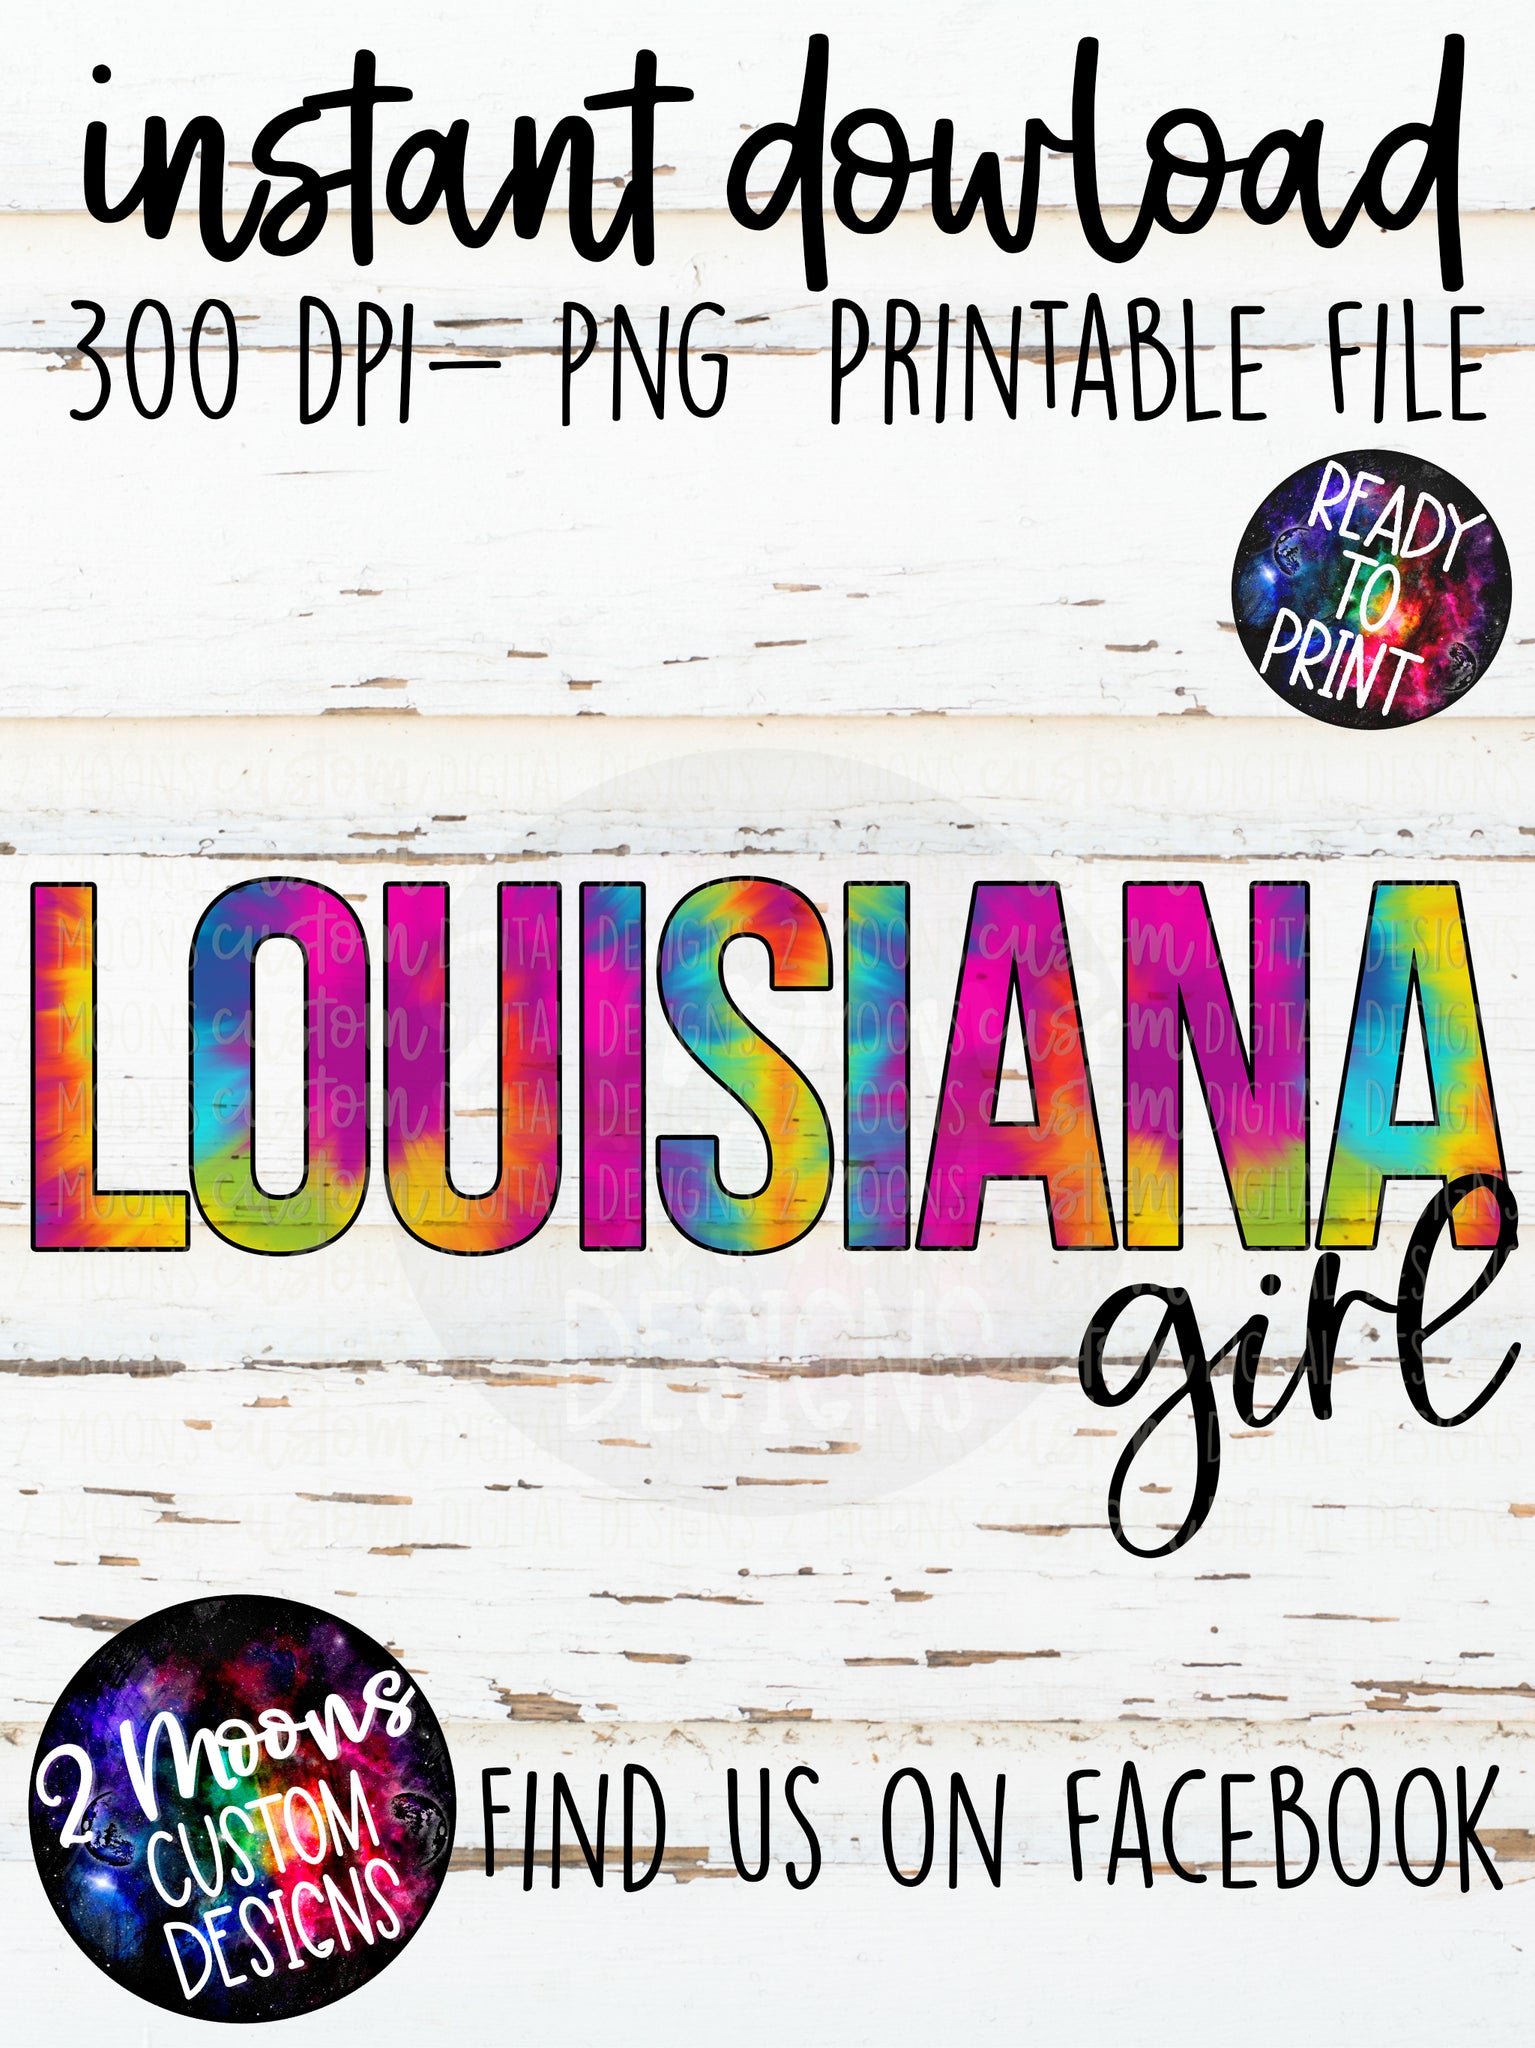 Louisiana Girl- Tie-Dye State